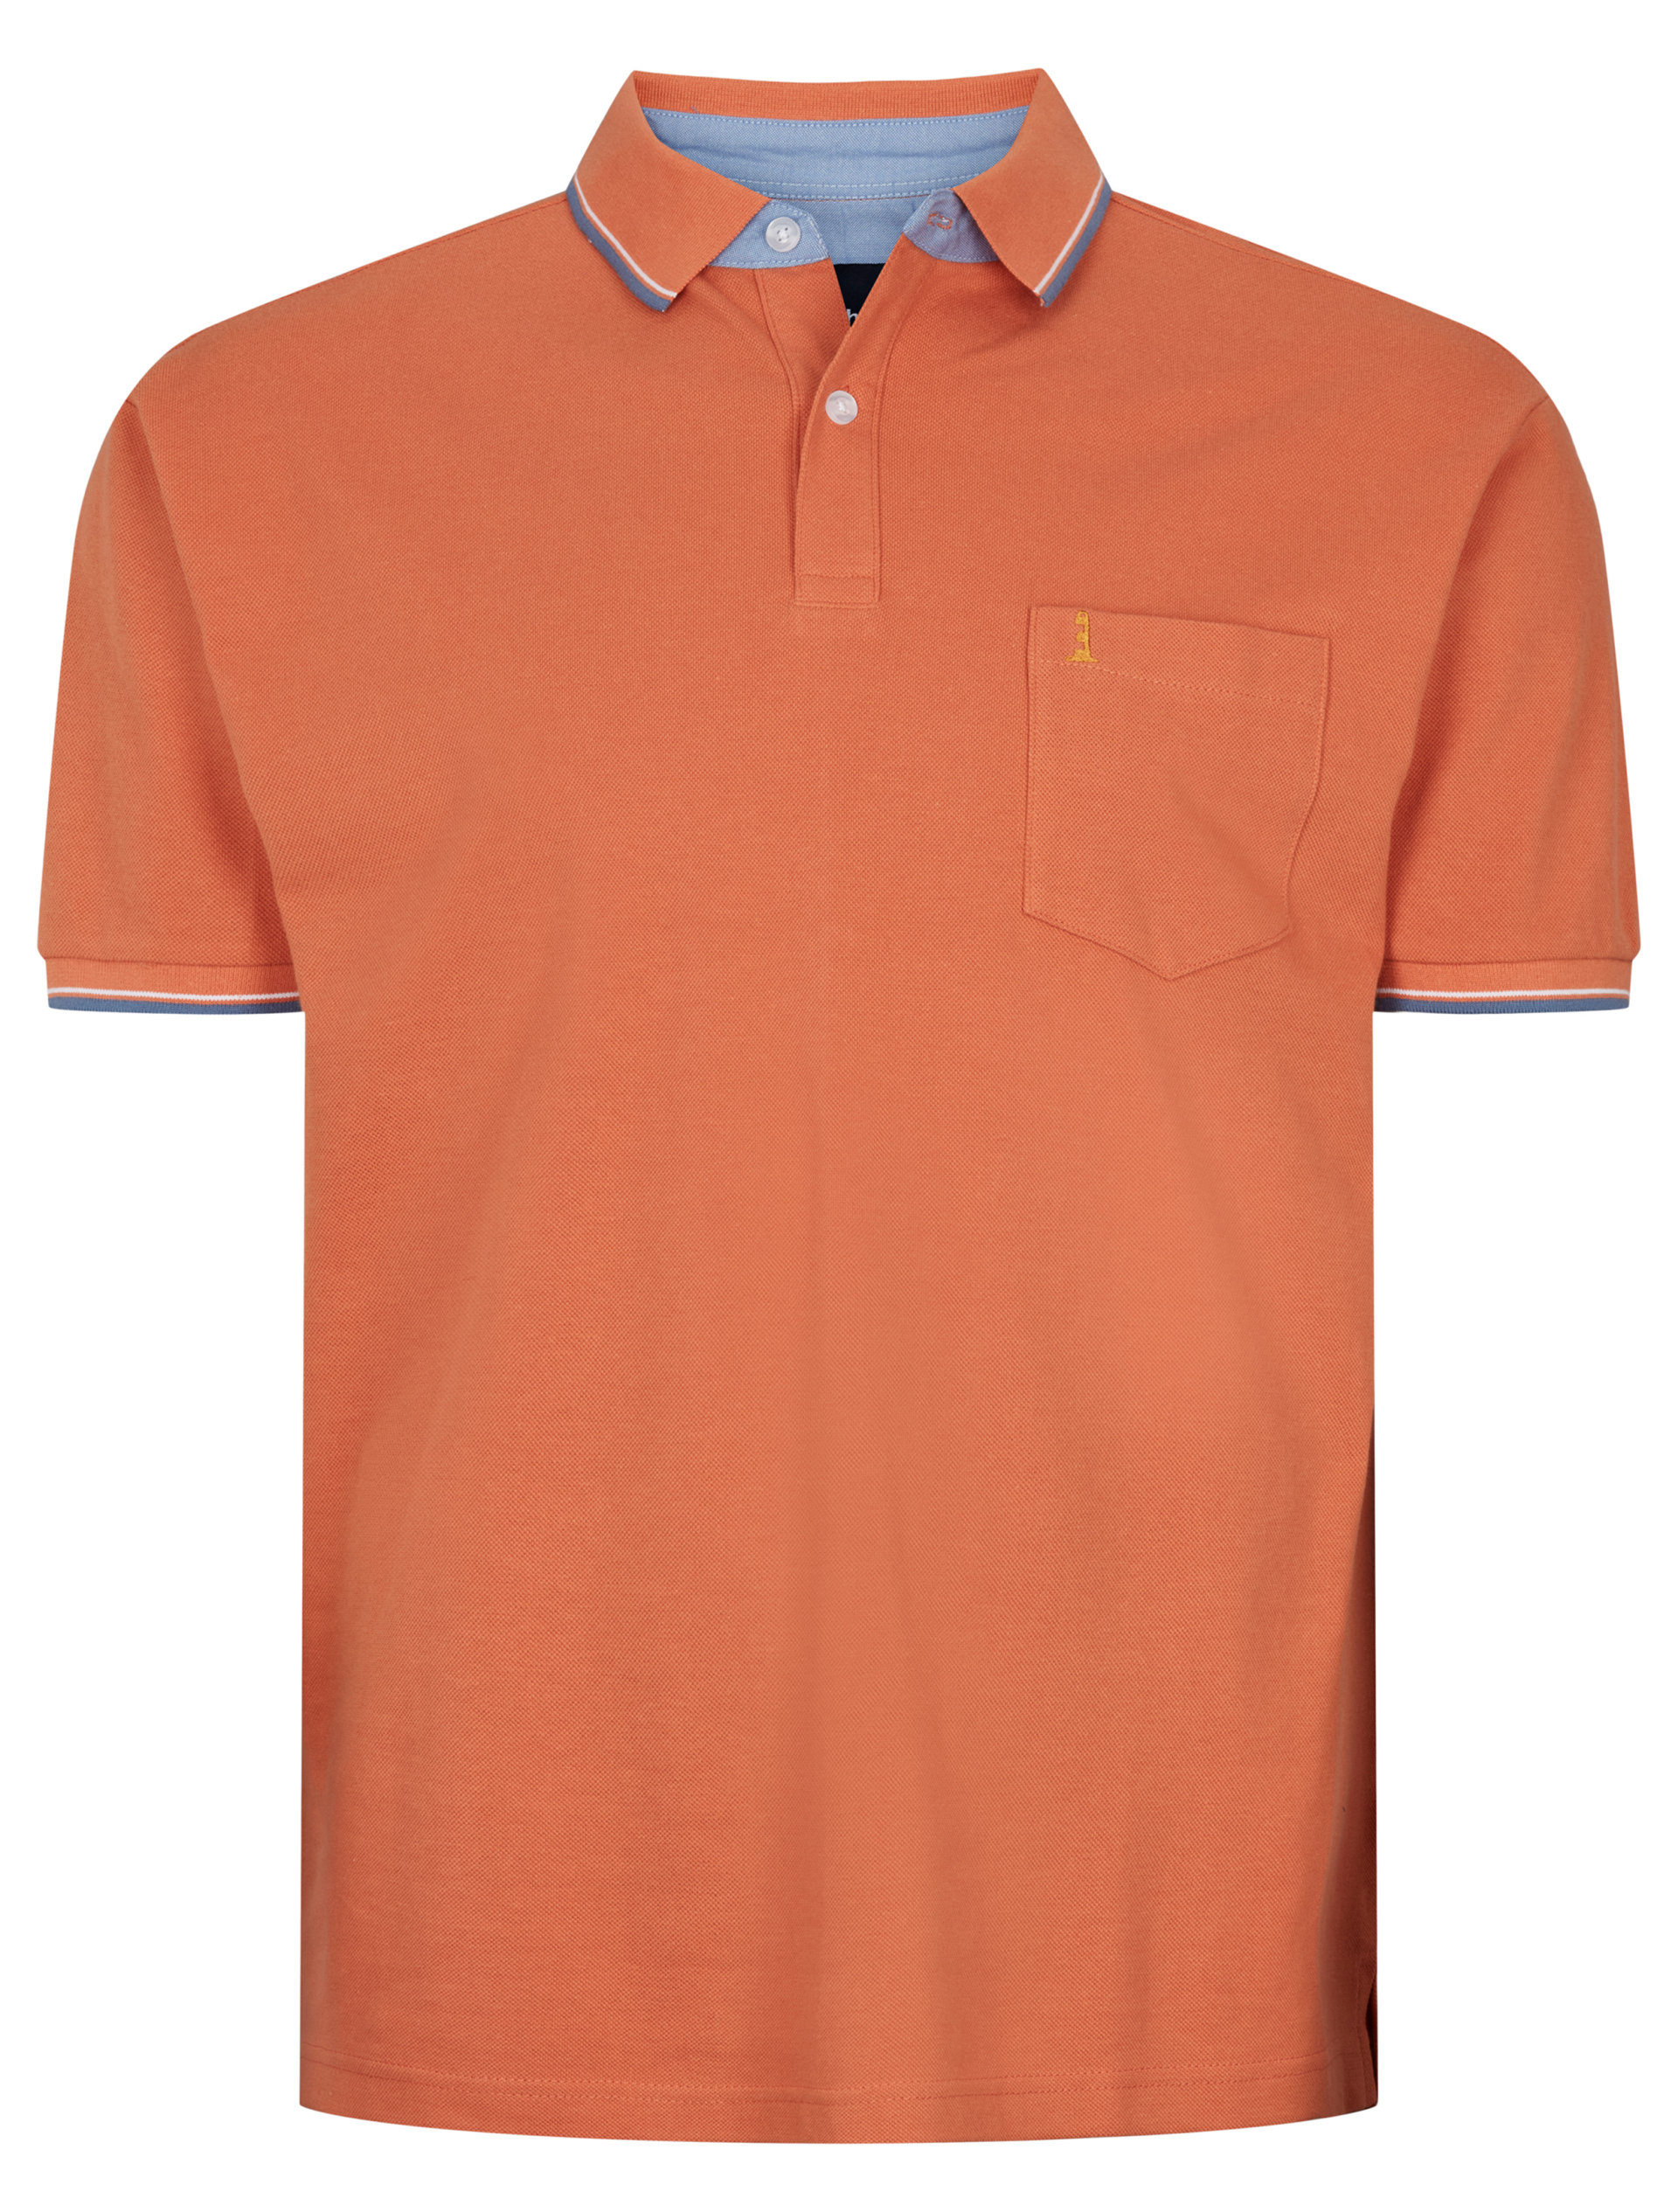 North Poloshirt orange / 0201 terracotta